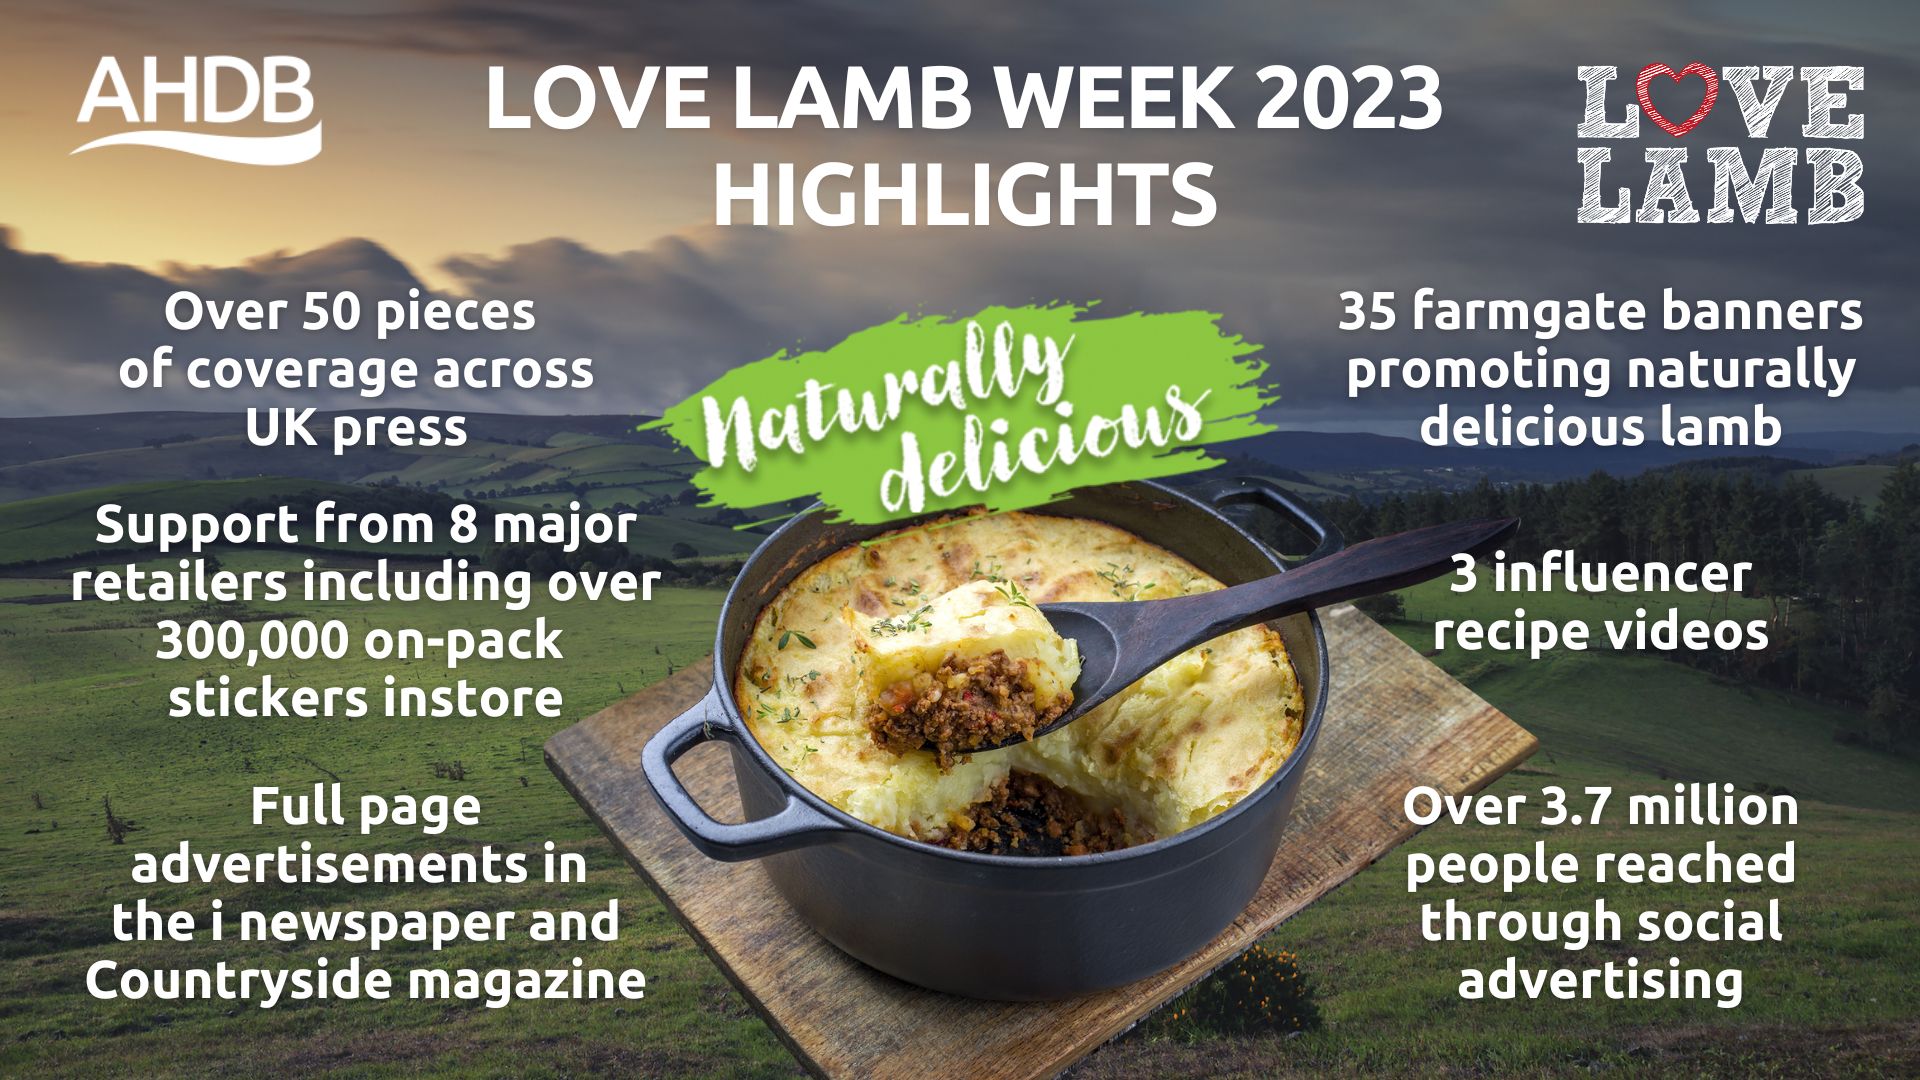 Love Lamb Week 2023 highlights listed